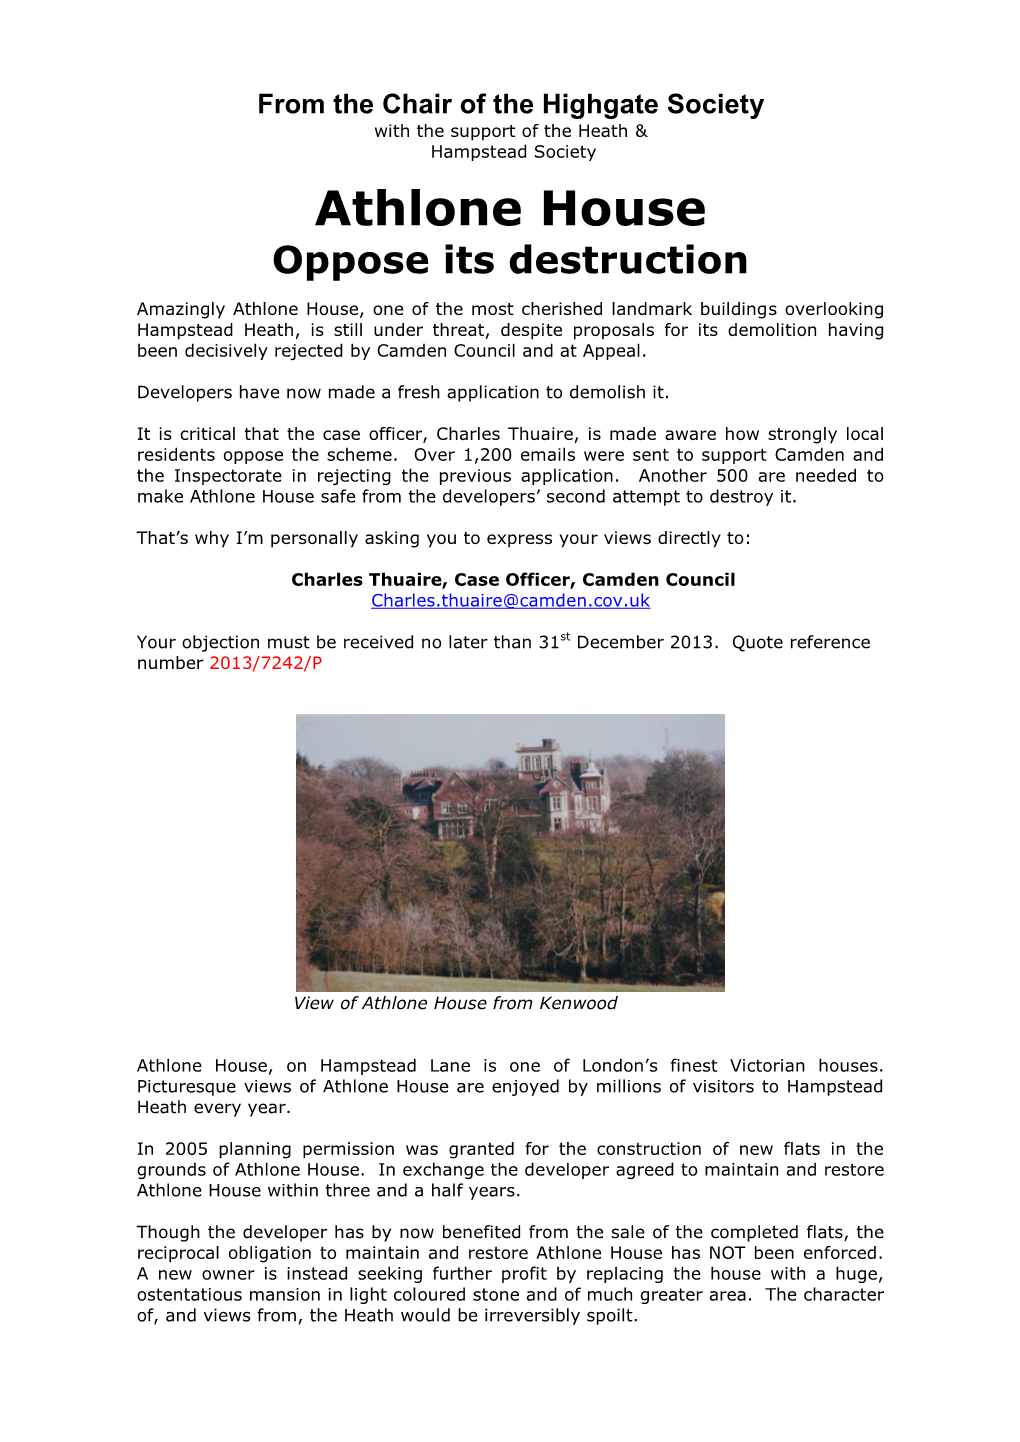 Athlone House Oppose Its Destruction